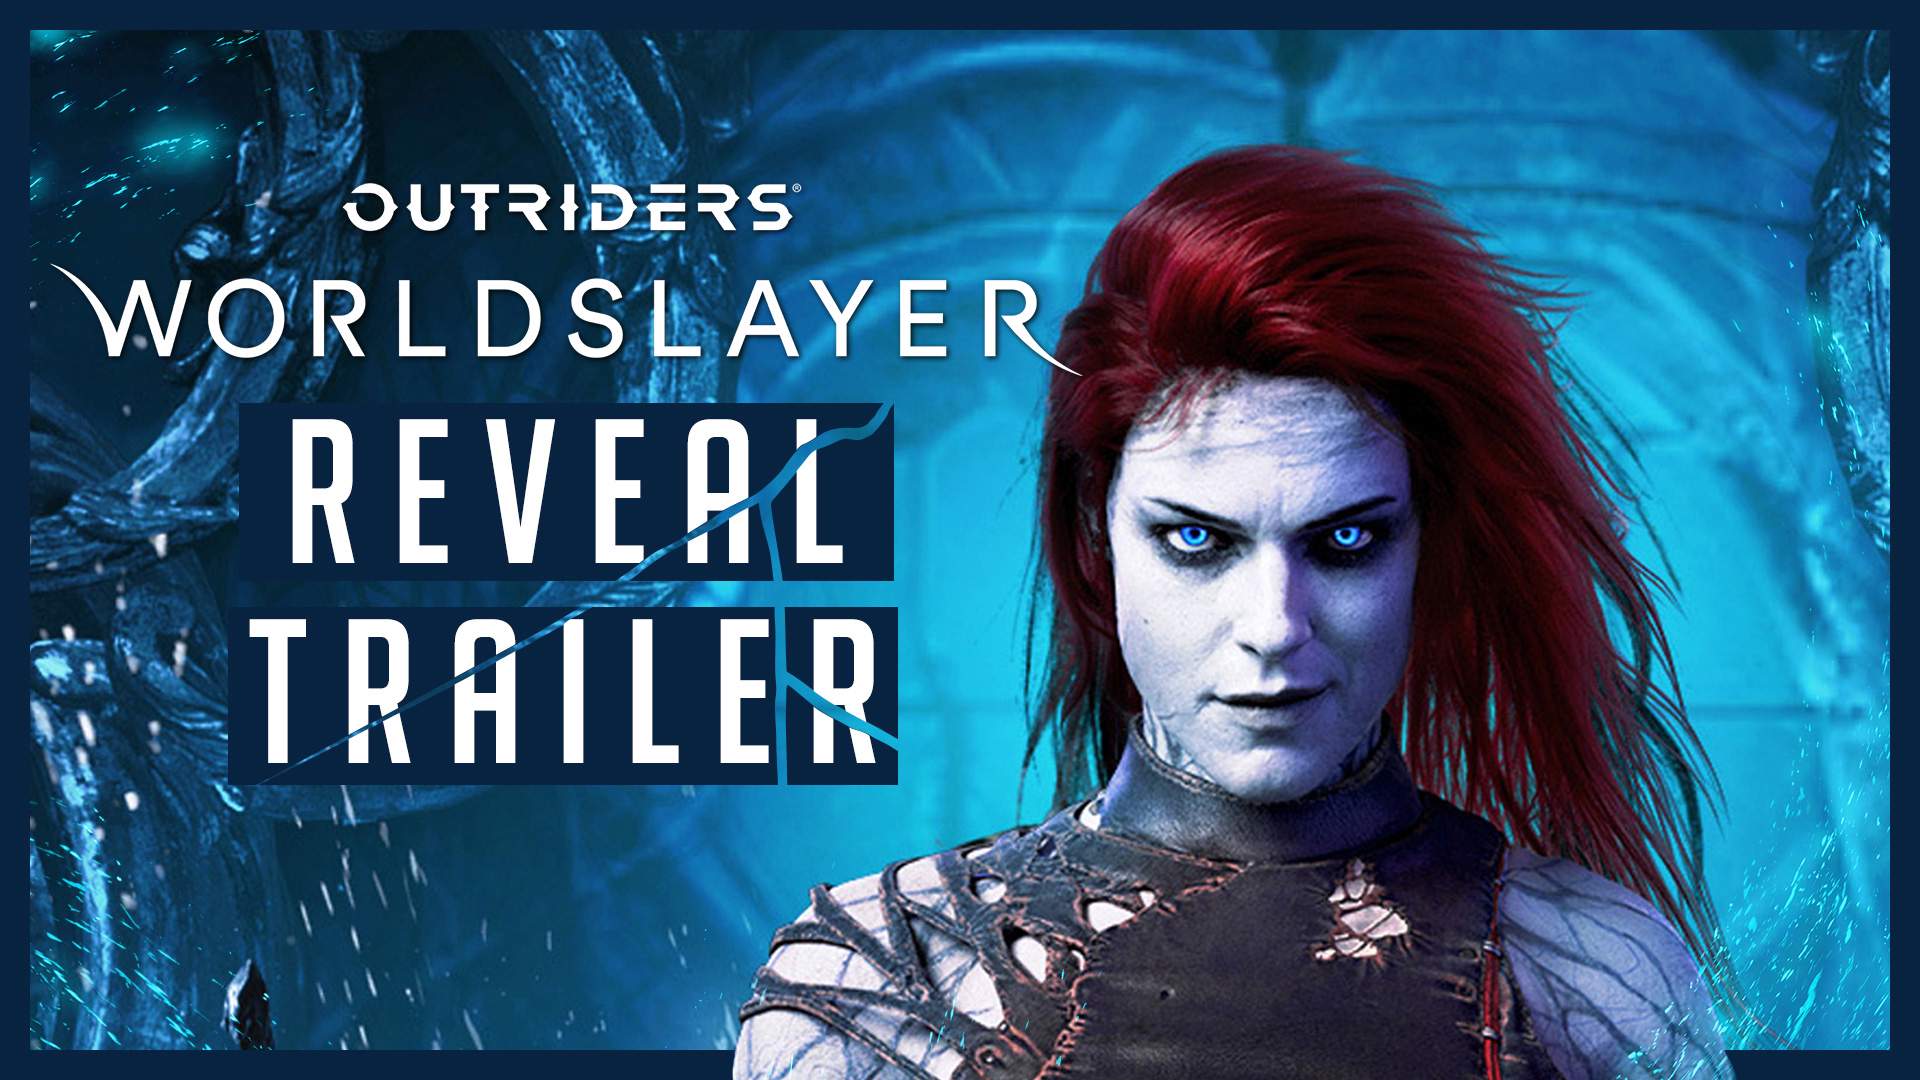 Outriders Worldslayer keyart – Ereshkigal and Outriders